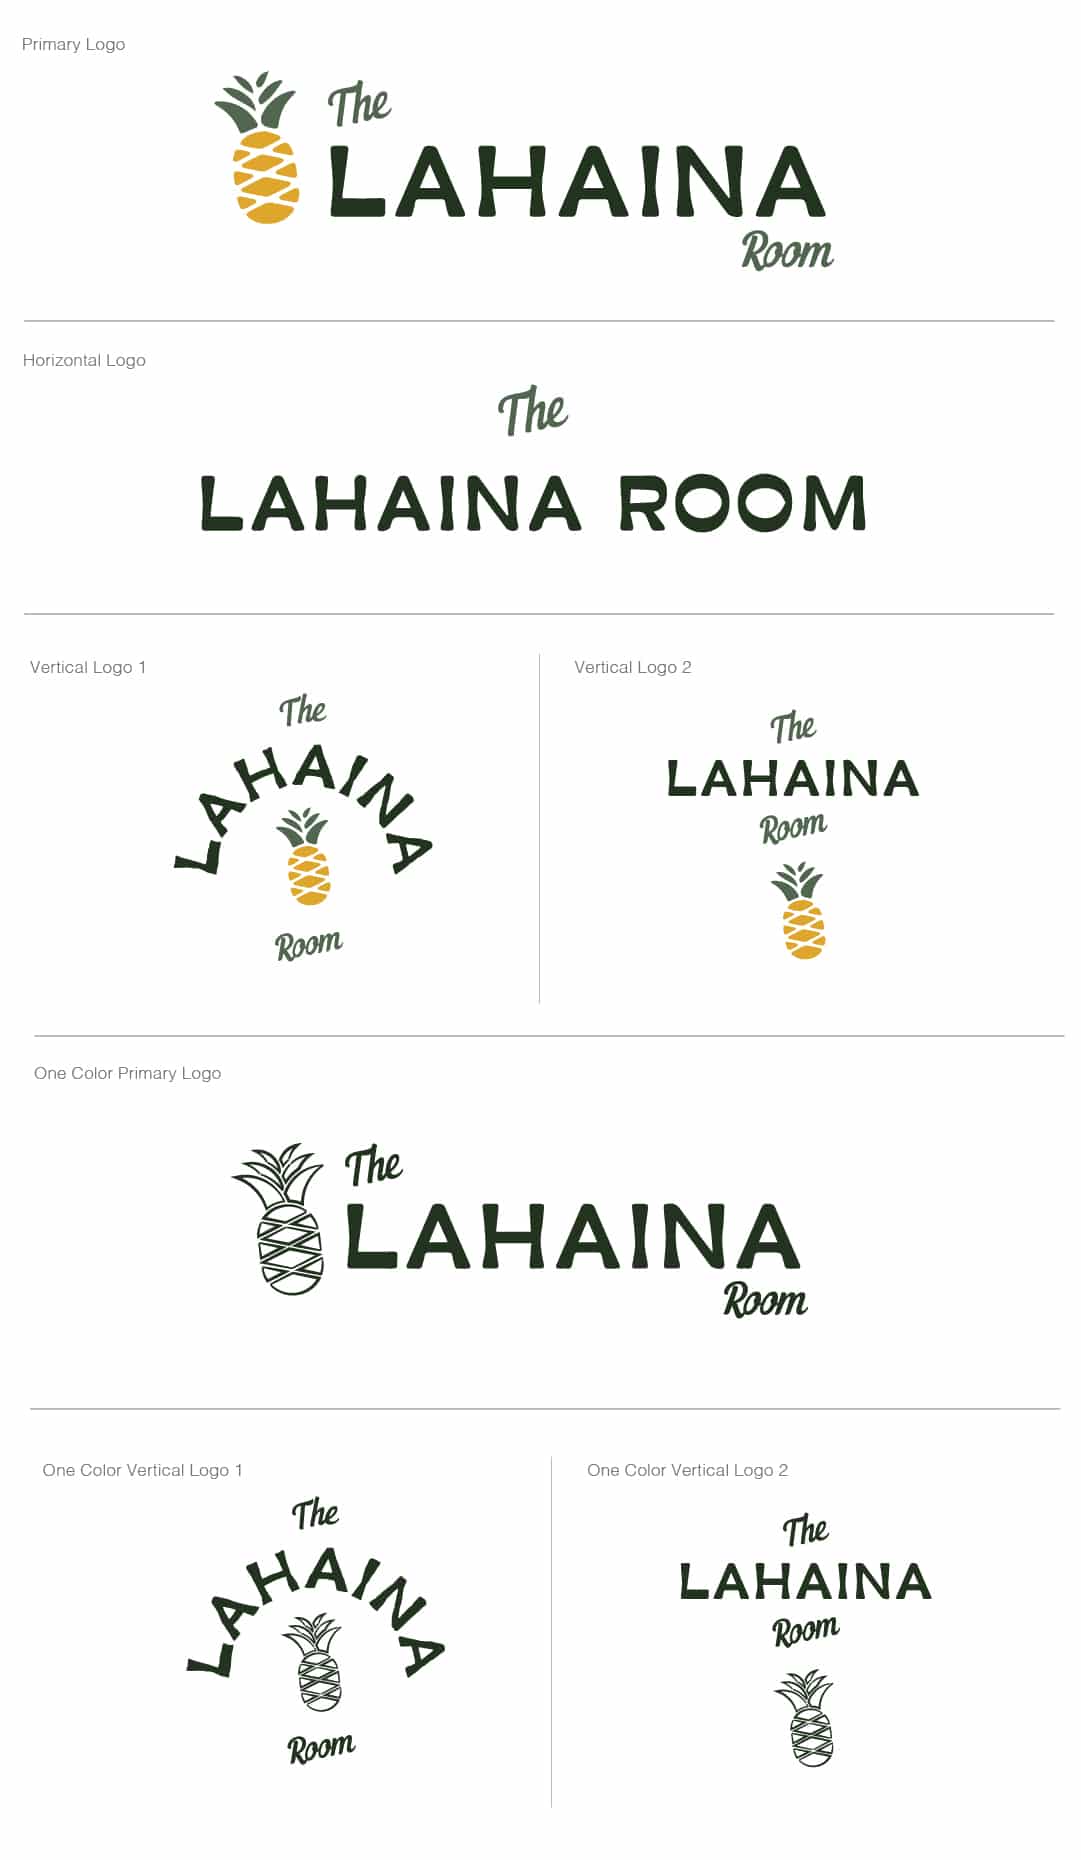 Logo Lock ups for The Lahaina Room Tiki Bar Branding by Stellen Design logo design and branding agency in Los Angeles California